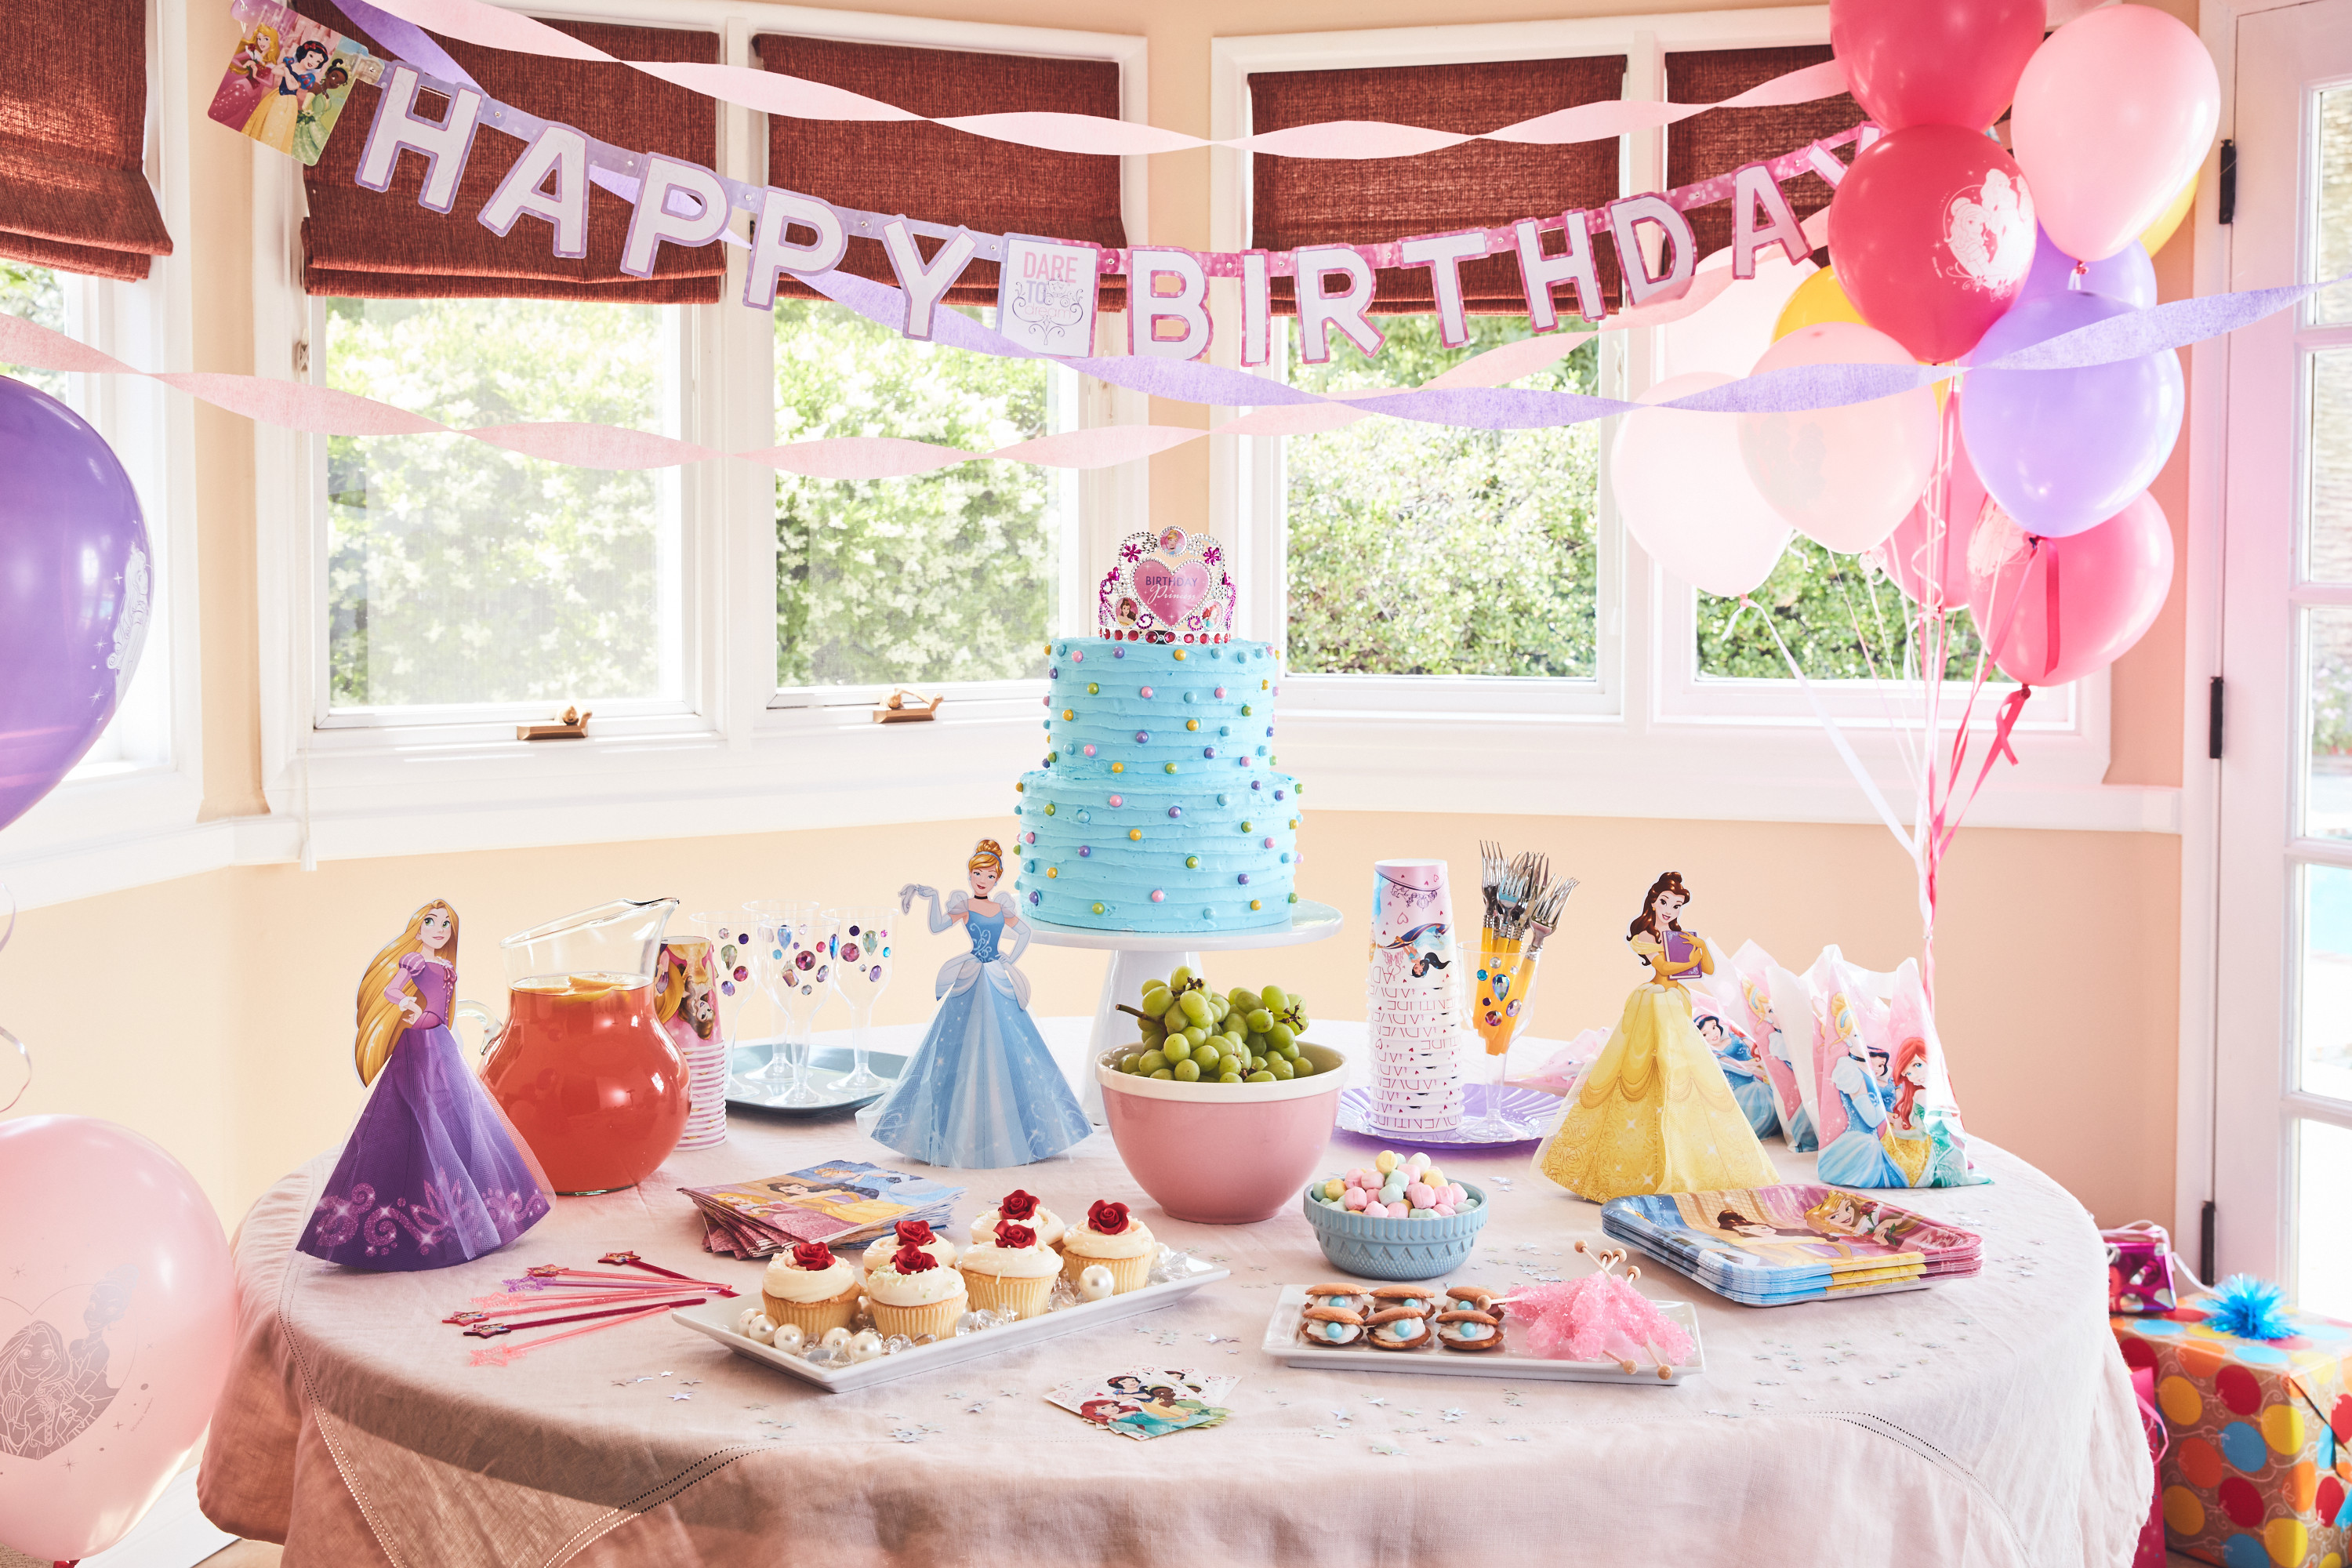 Best ideas about Disney Princess Birthday Party Ideas
. Save or Pin Disney Princess Birthday Party Now.